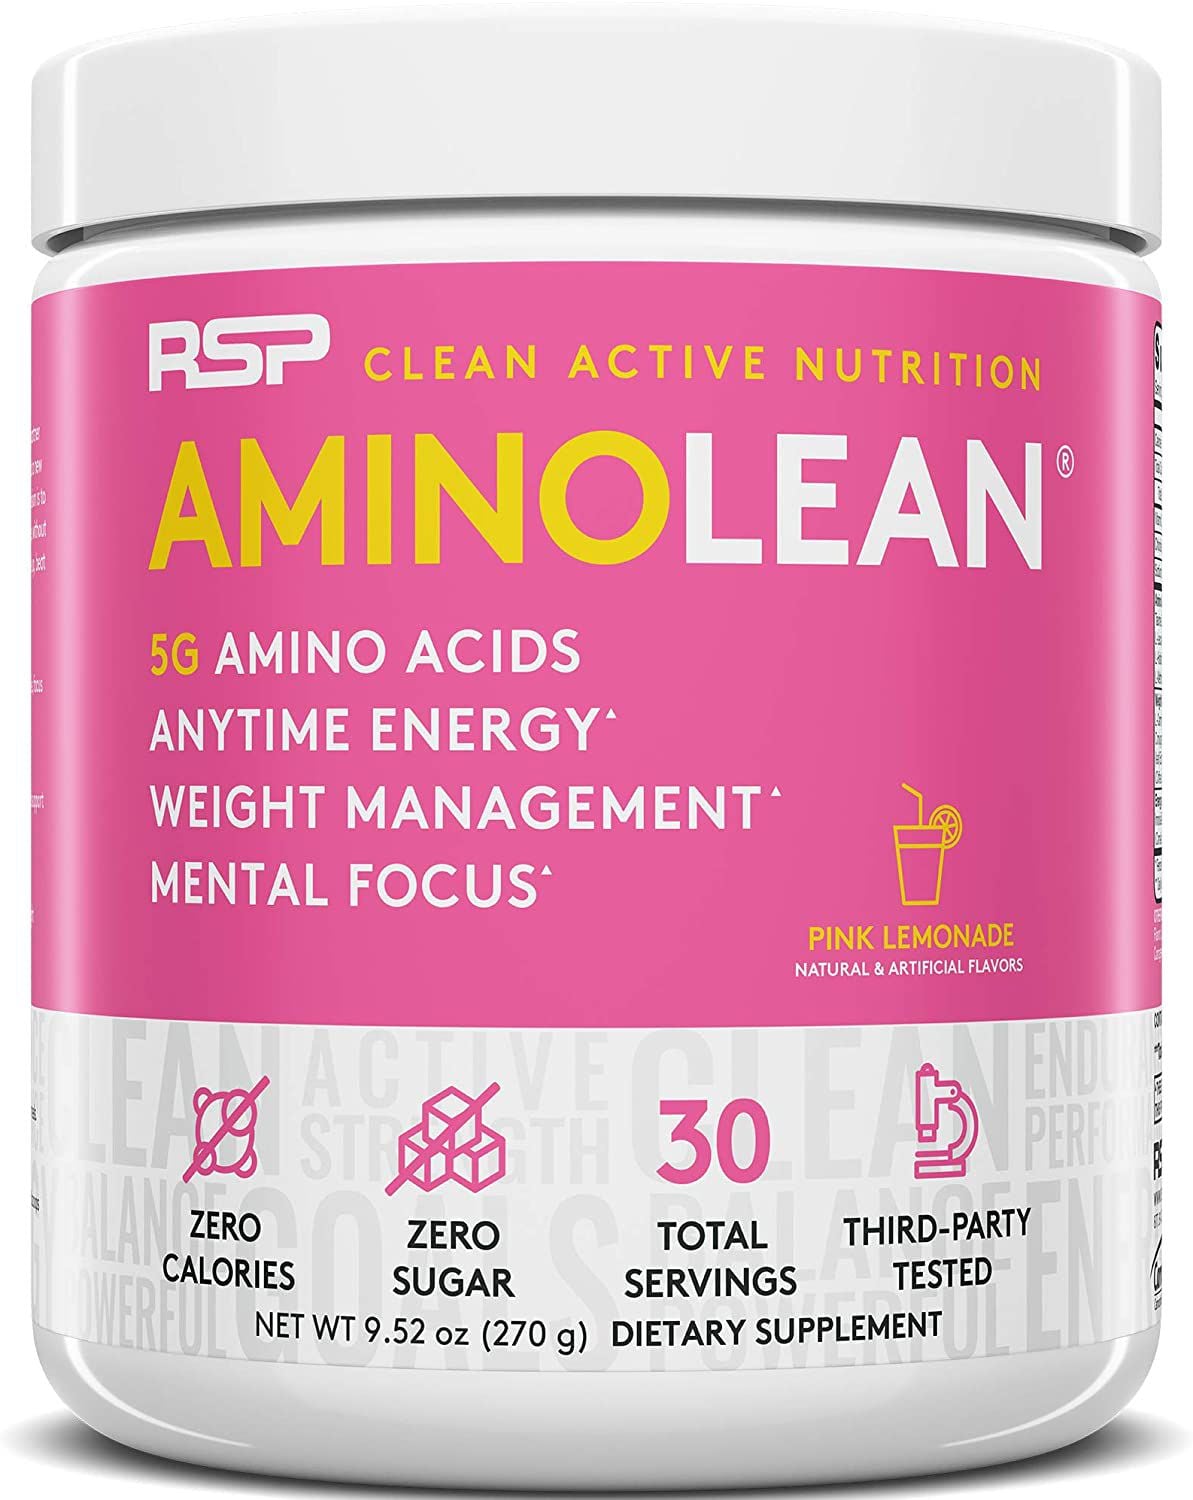 AminoLean pink product label